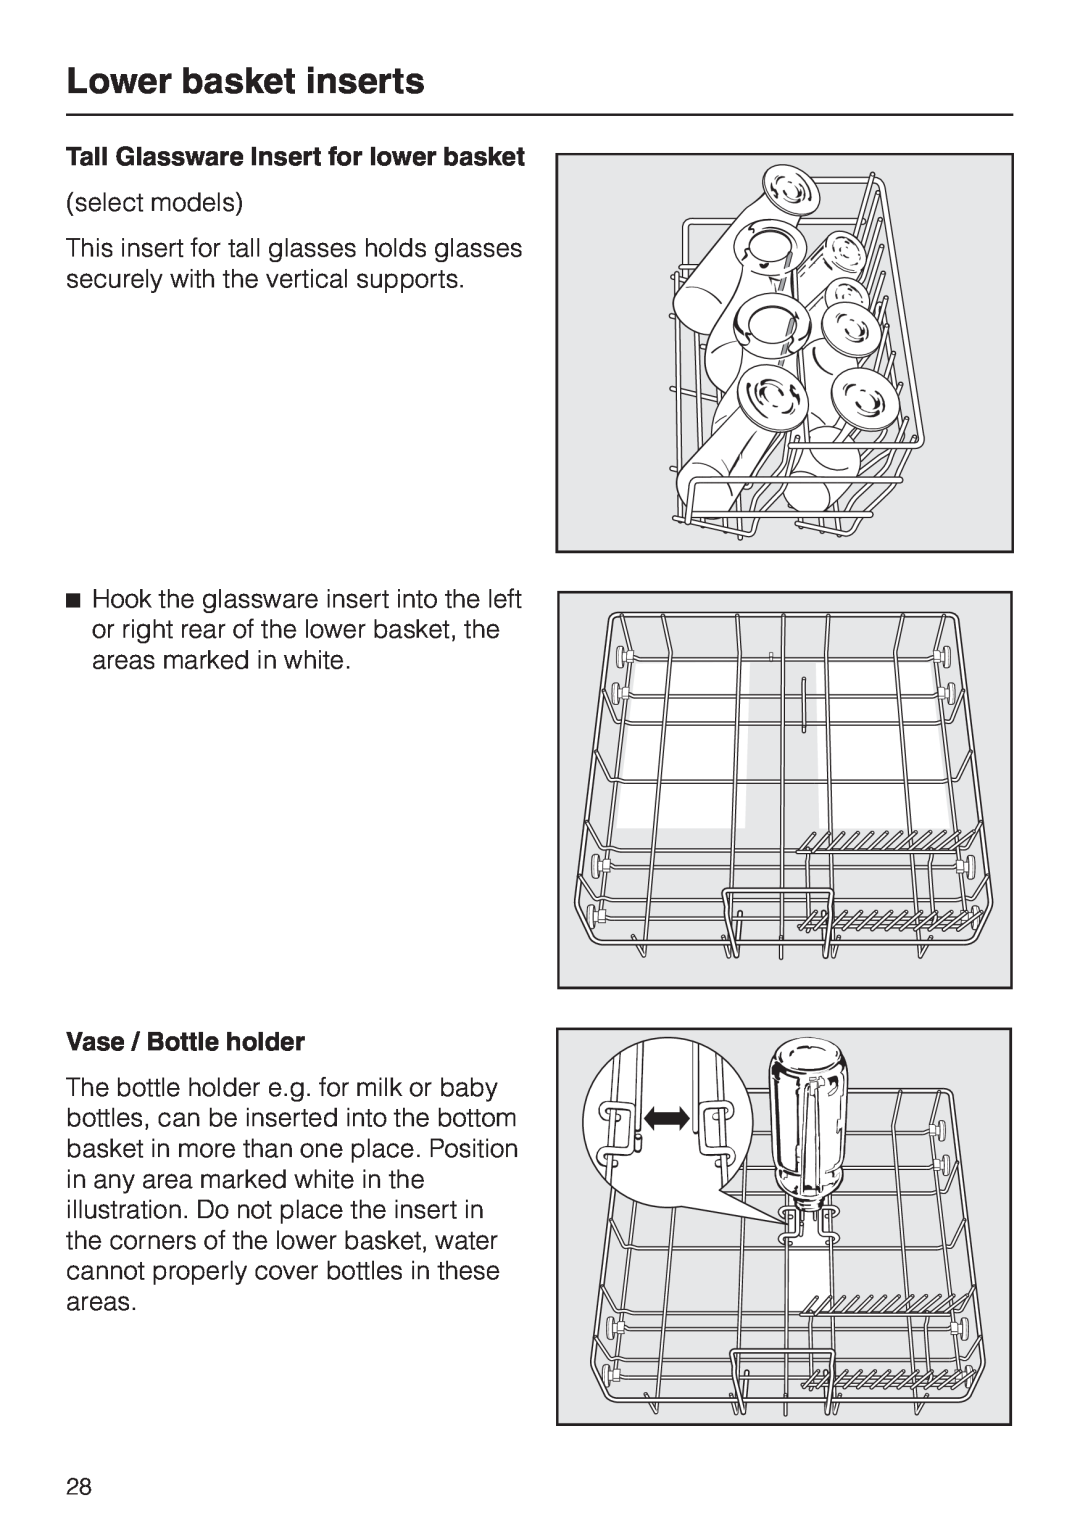 Miele HG01 operating instructions Tall Glassware Insert for lower basket, Vase / Bottle holder, Lower basket inserts 